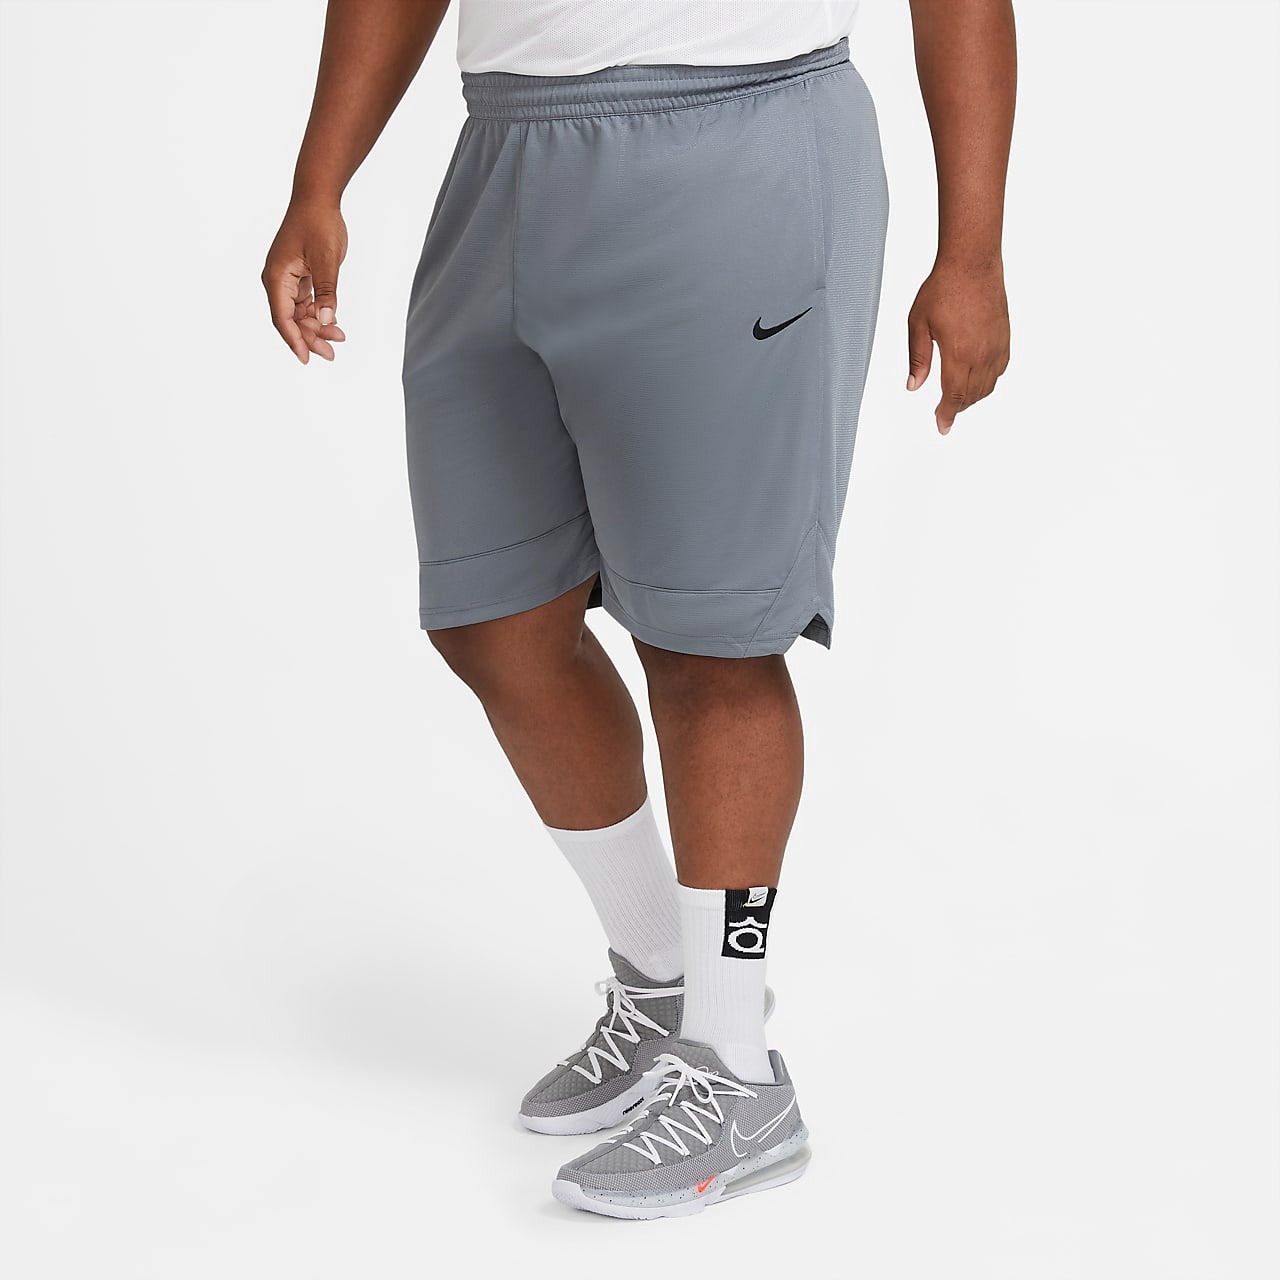 8 Incredible Nike Dri-Fit Basketball Shorts For 2023